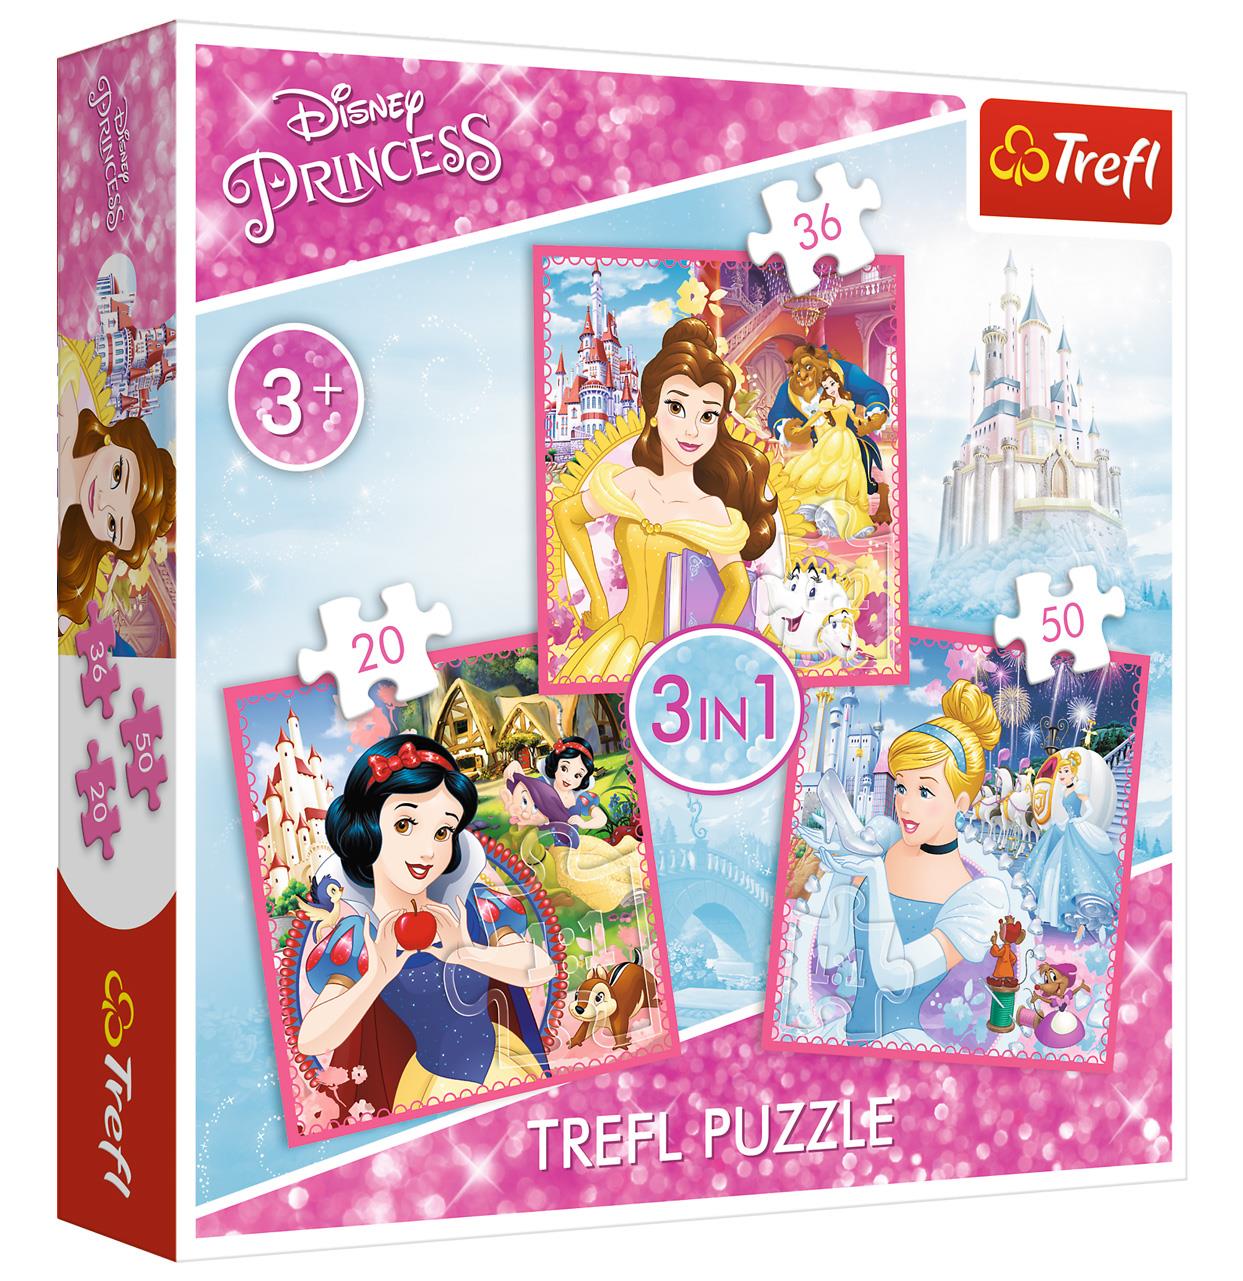 Trefl Çocuk Puzzle 34833 The Enchanted World Of Princess, Disney 20+36+50 Parça 3 in 1 Puzzle